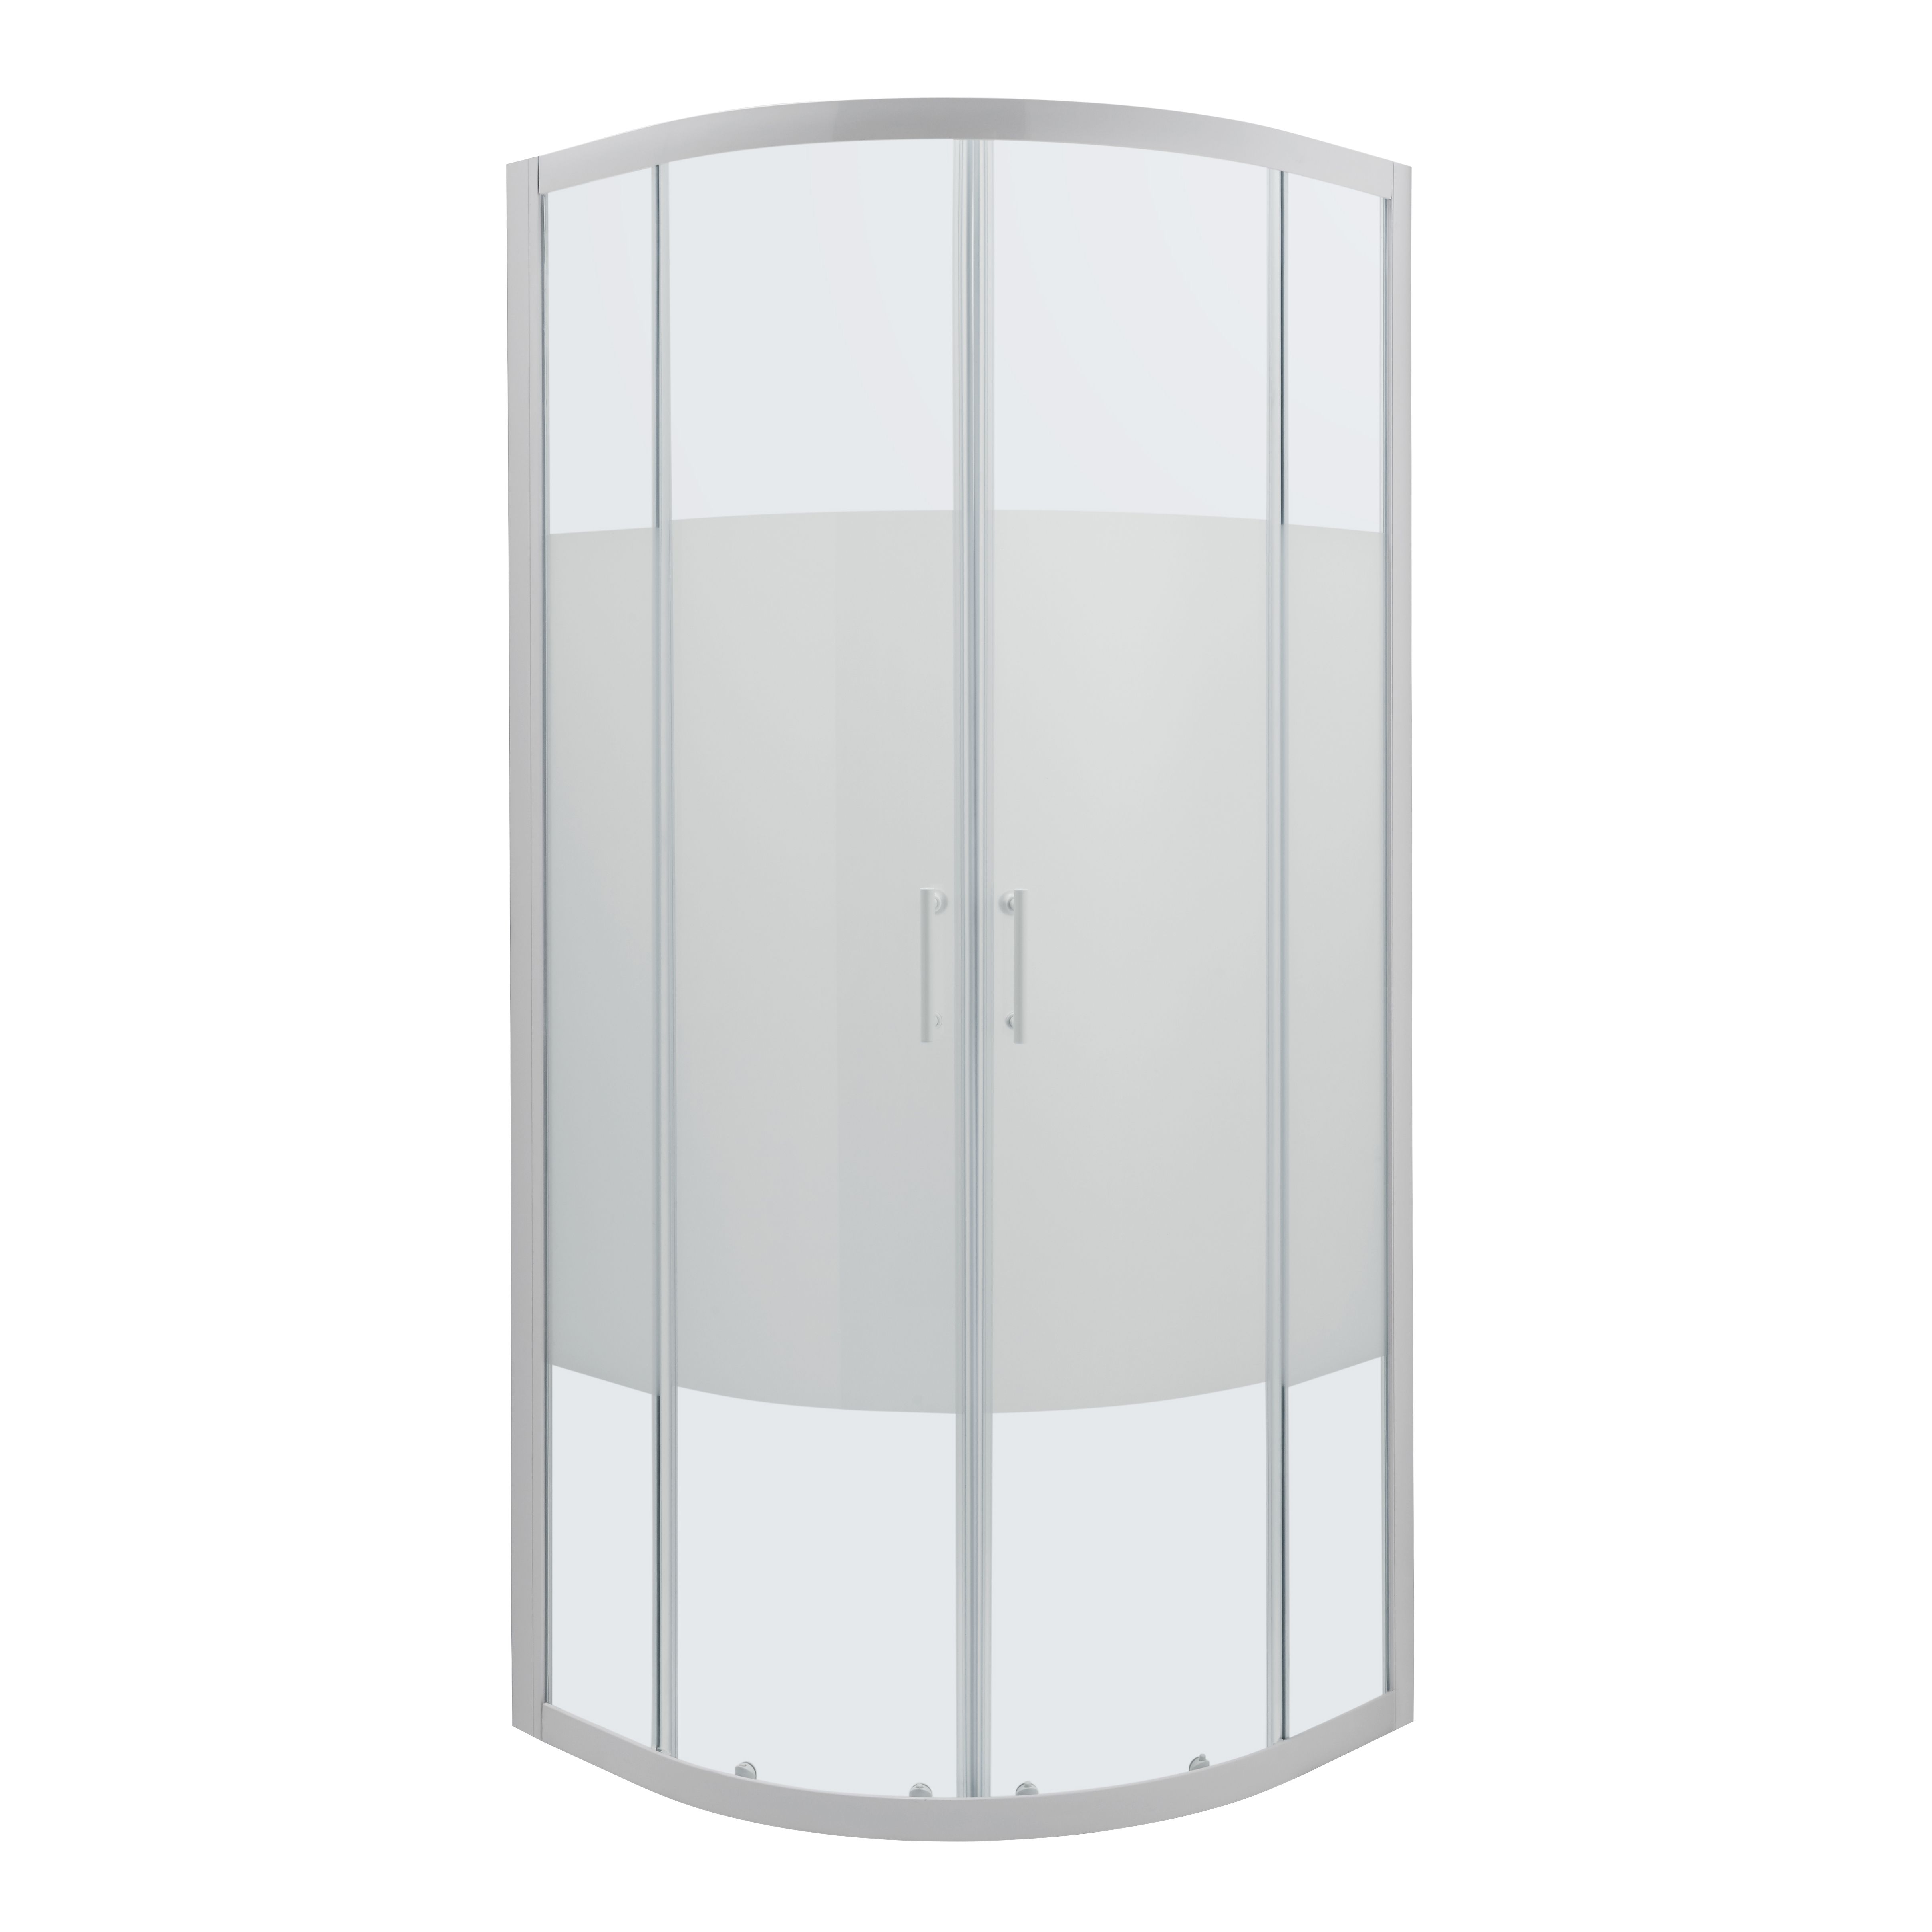 GoodHome Onega Quadrant Shower Enclosure & tray - Corner entry double sliding door (H)190cm (W)80cm (D)80cm